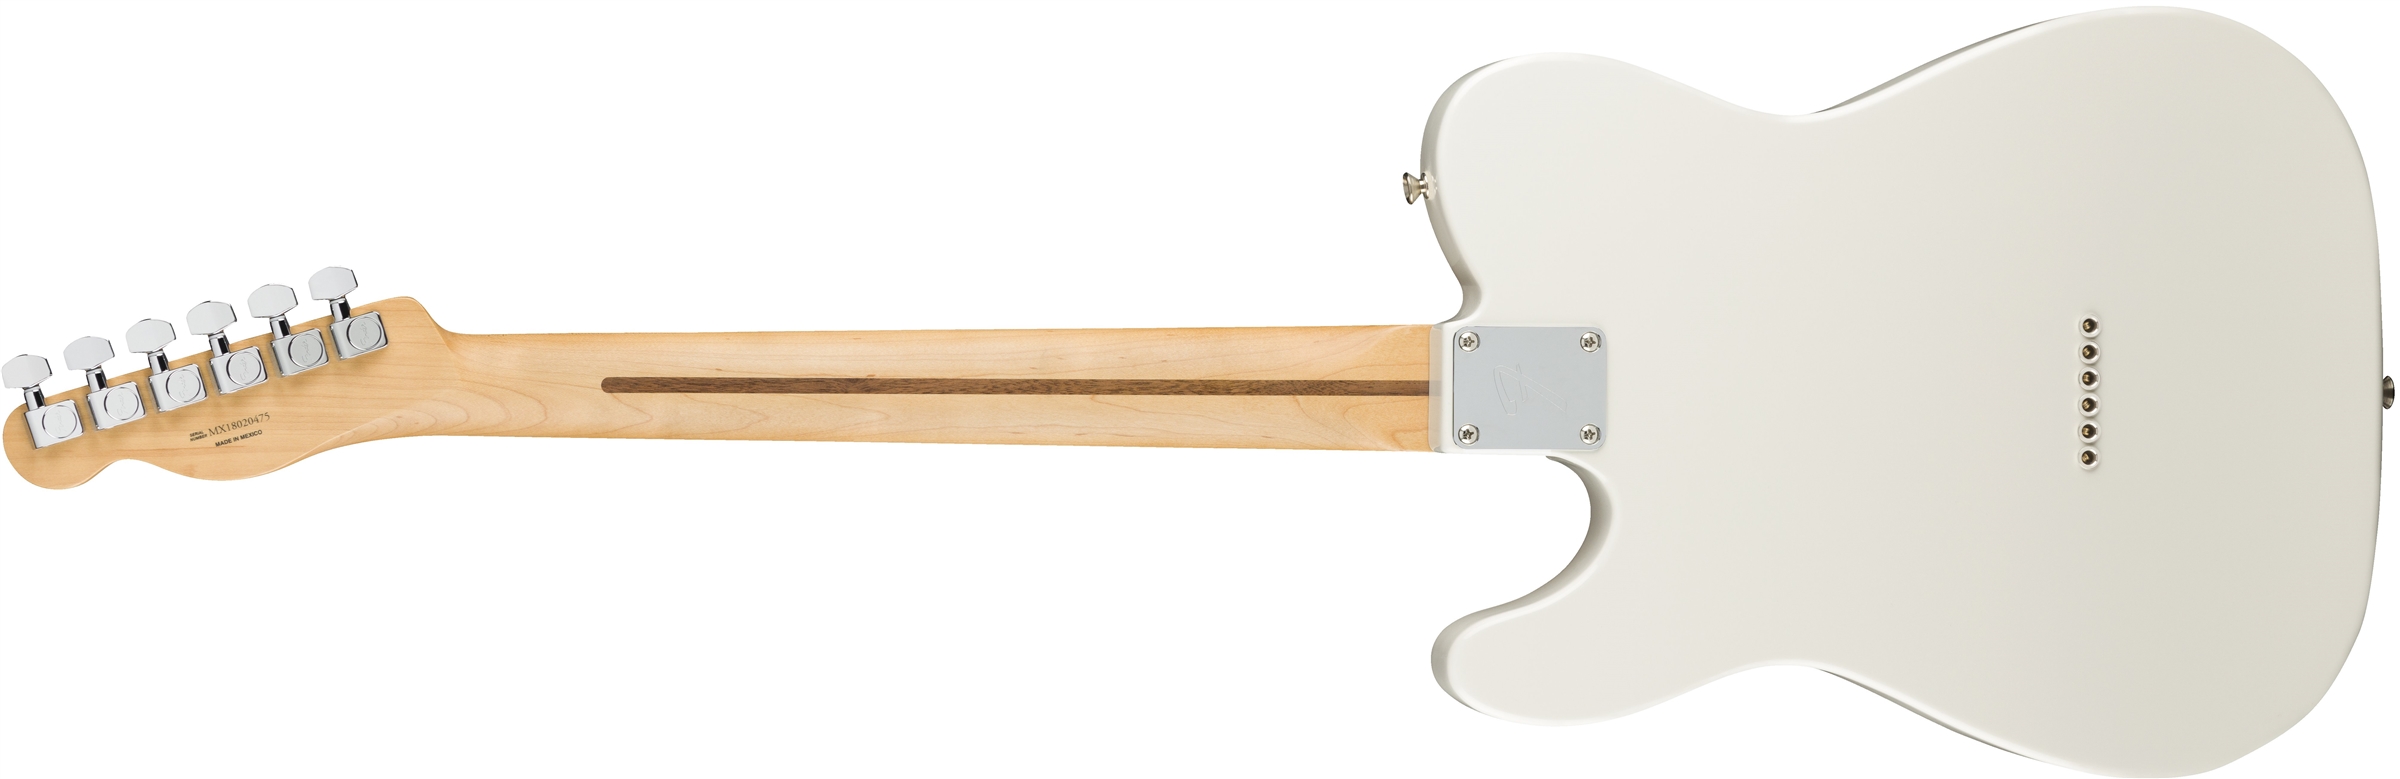 Fender Tele Player Mex Mn - Polar White - Tel shape electric guitar - Variation 2